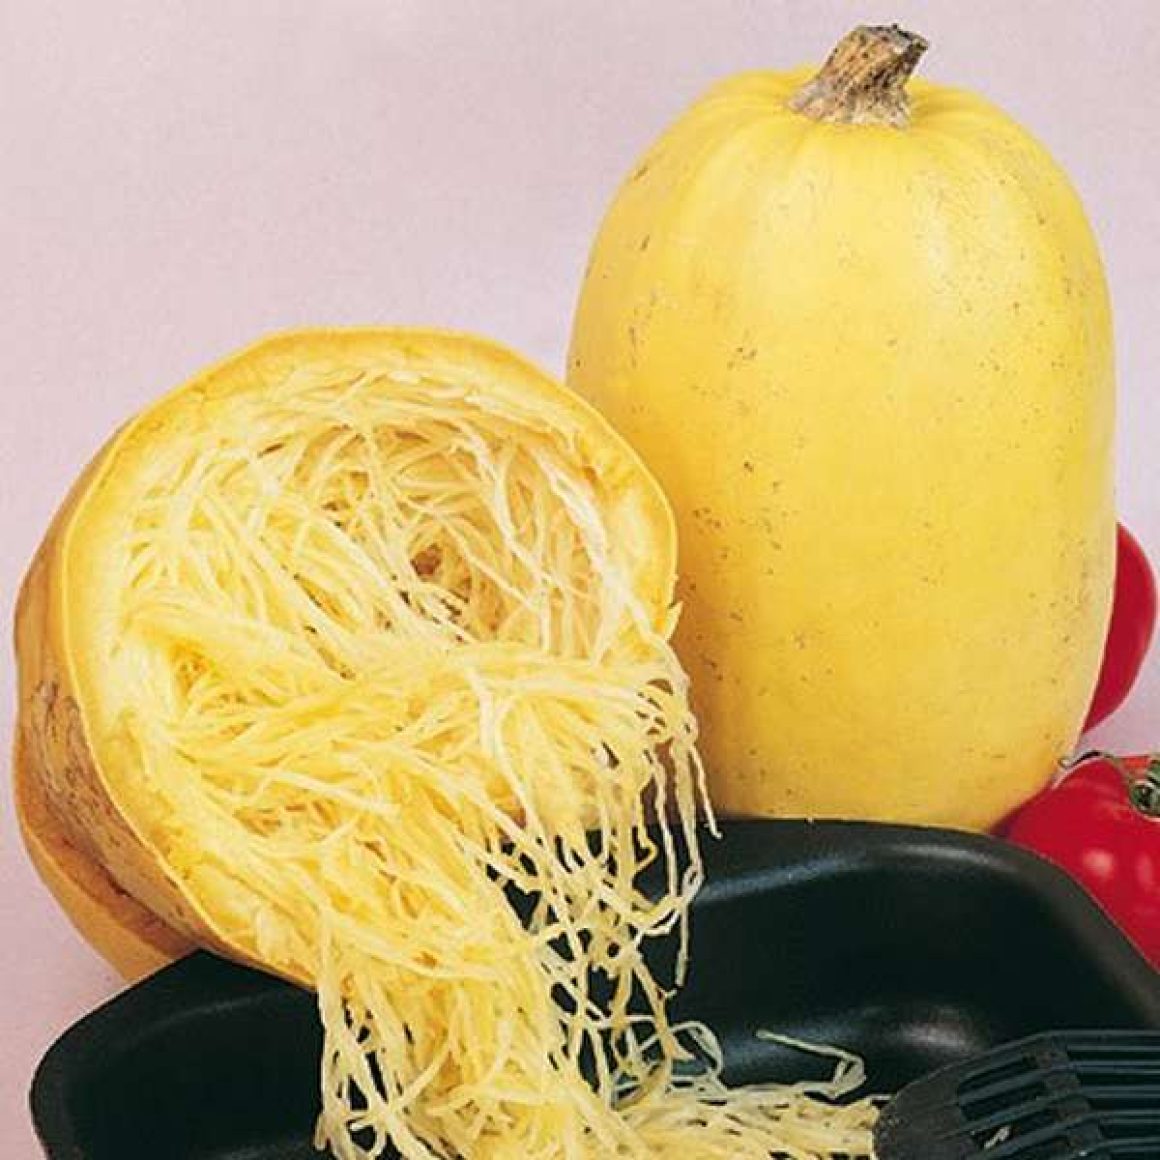 spaghetti squash